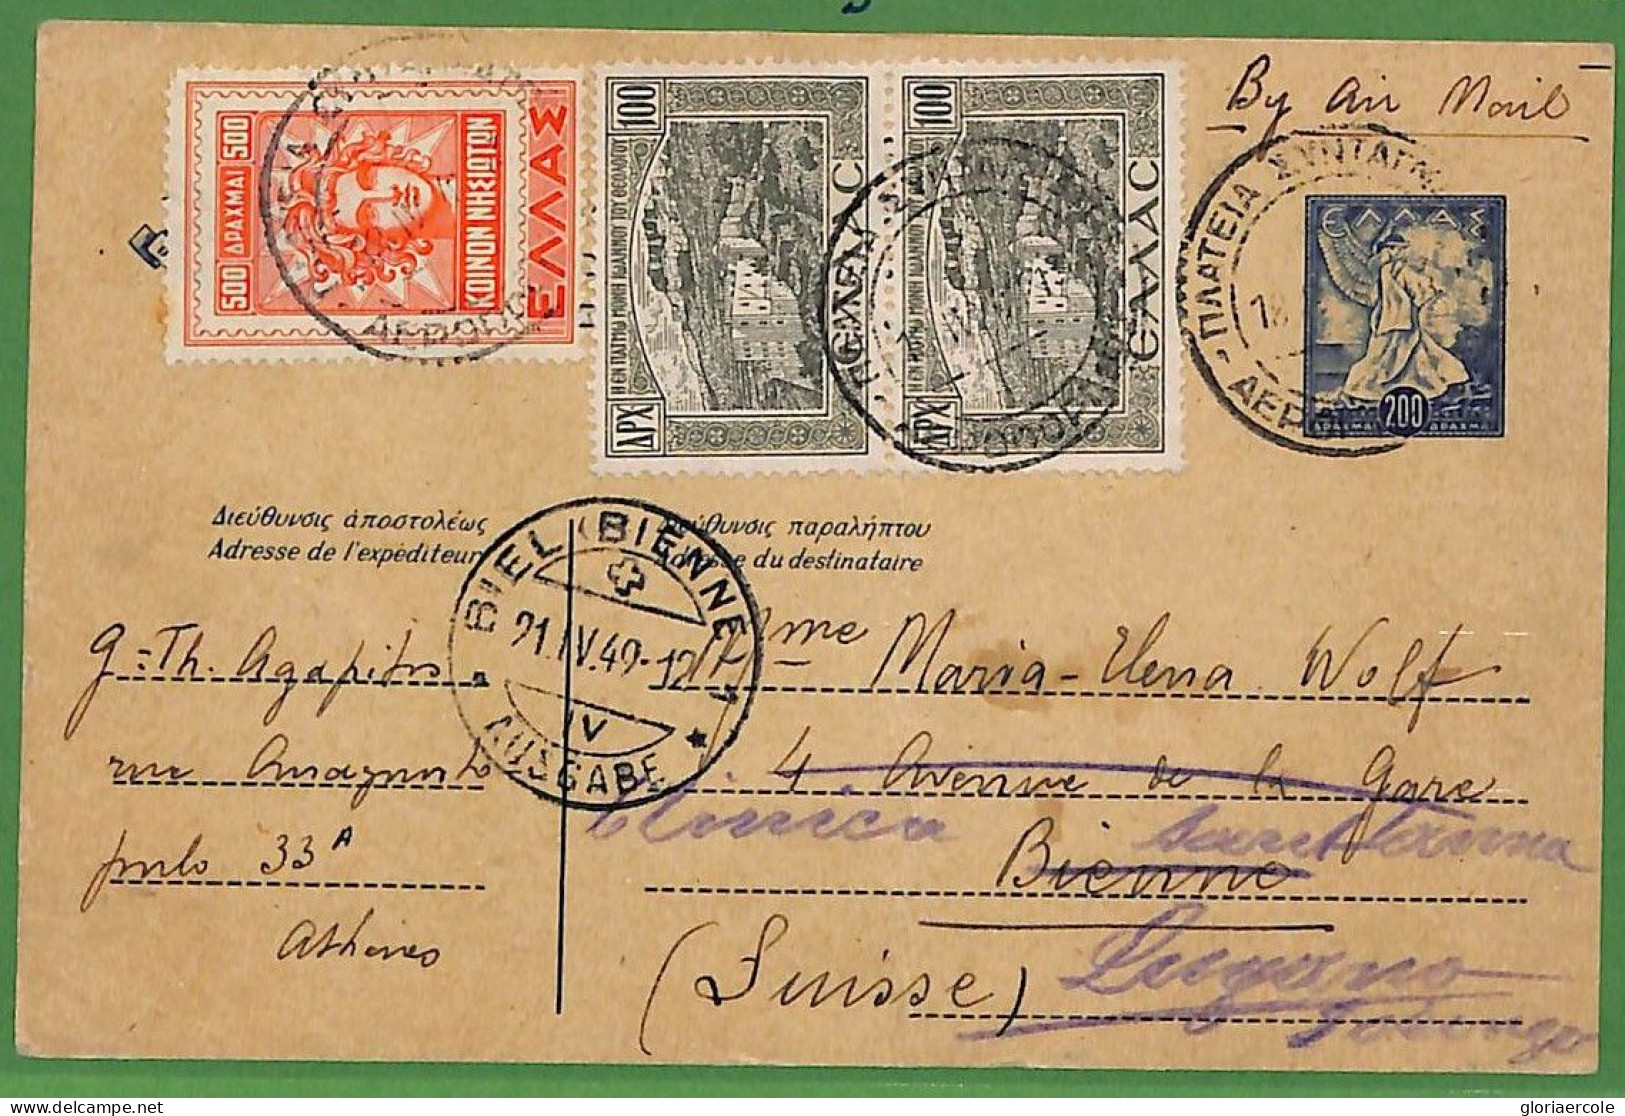 Ad0921 - GREECE - Postal History - Postal STATIONERY CARD Added Franking  To SWITZERLAND 1949 - Postal Stationery